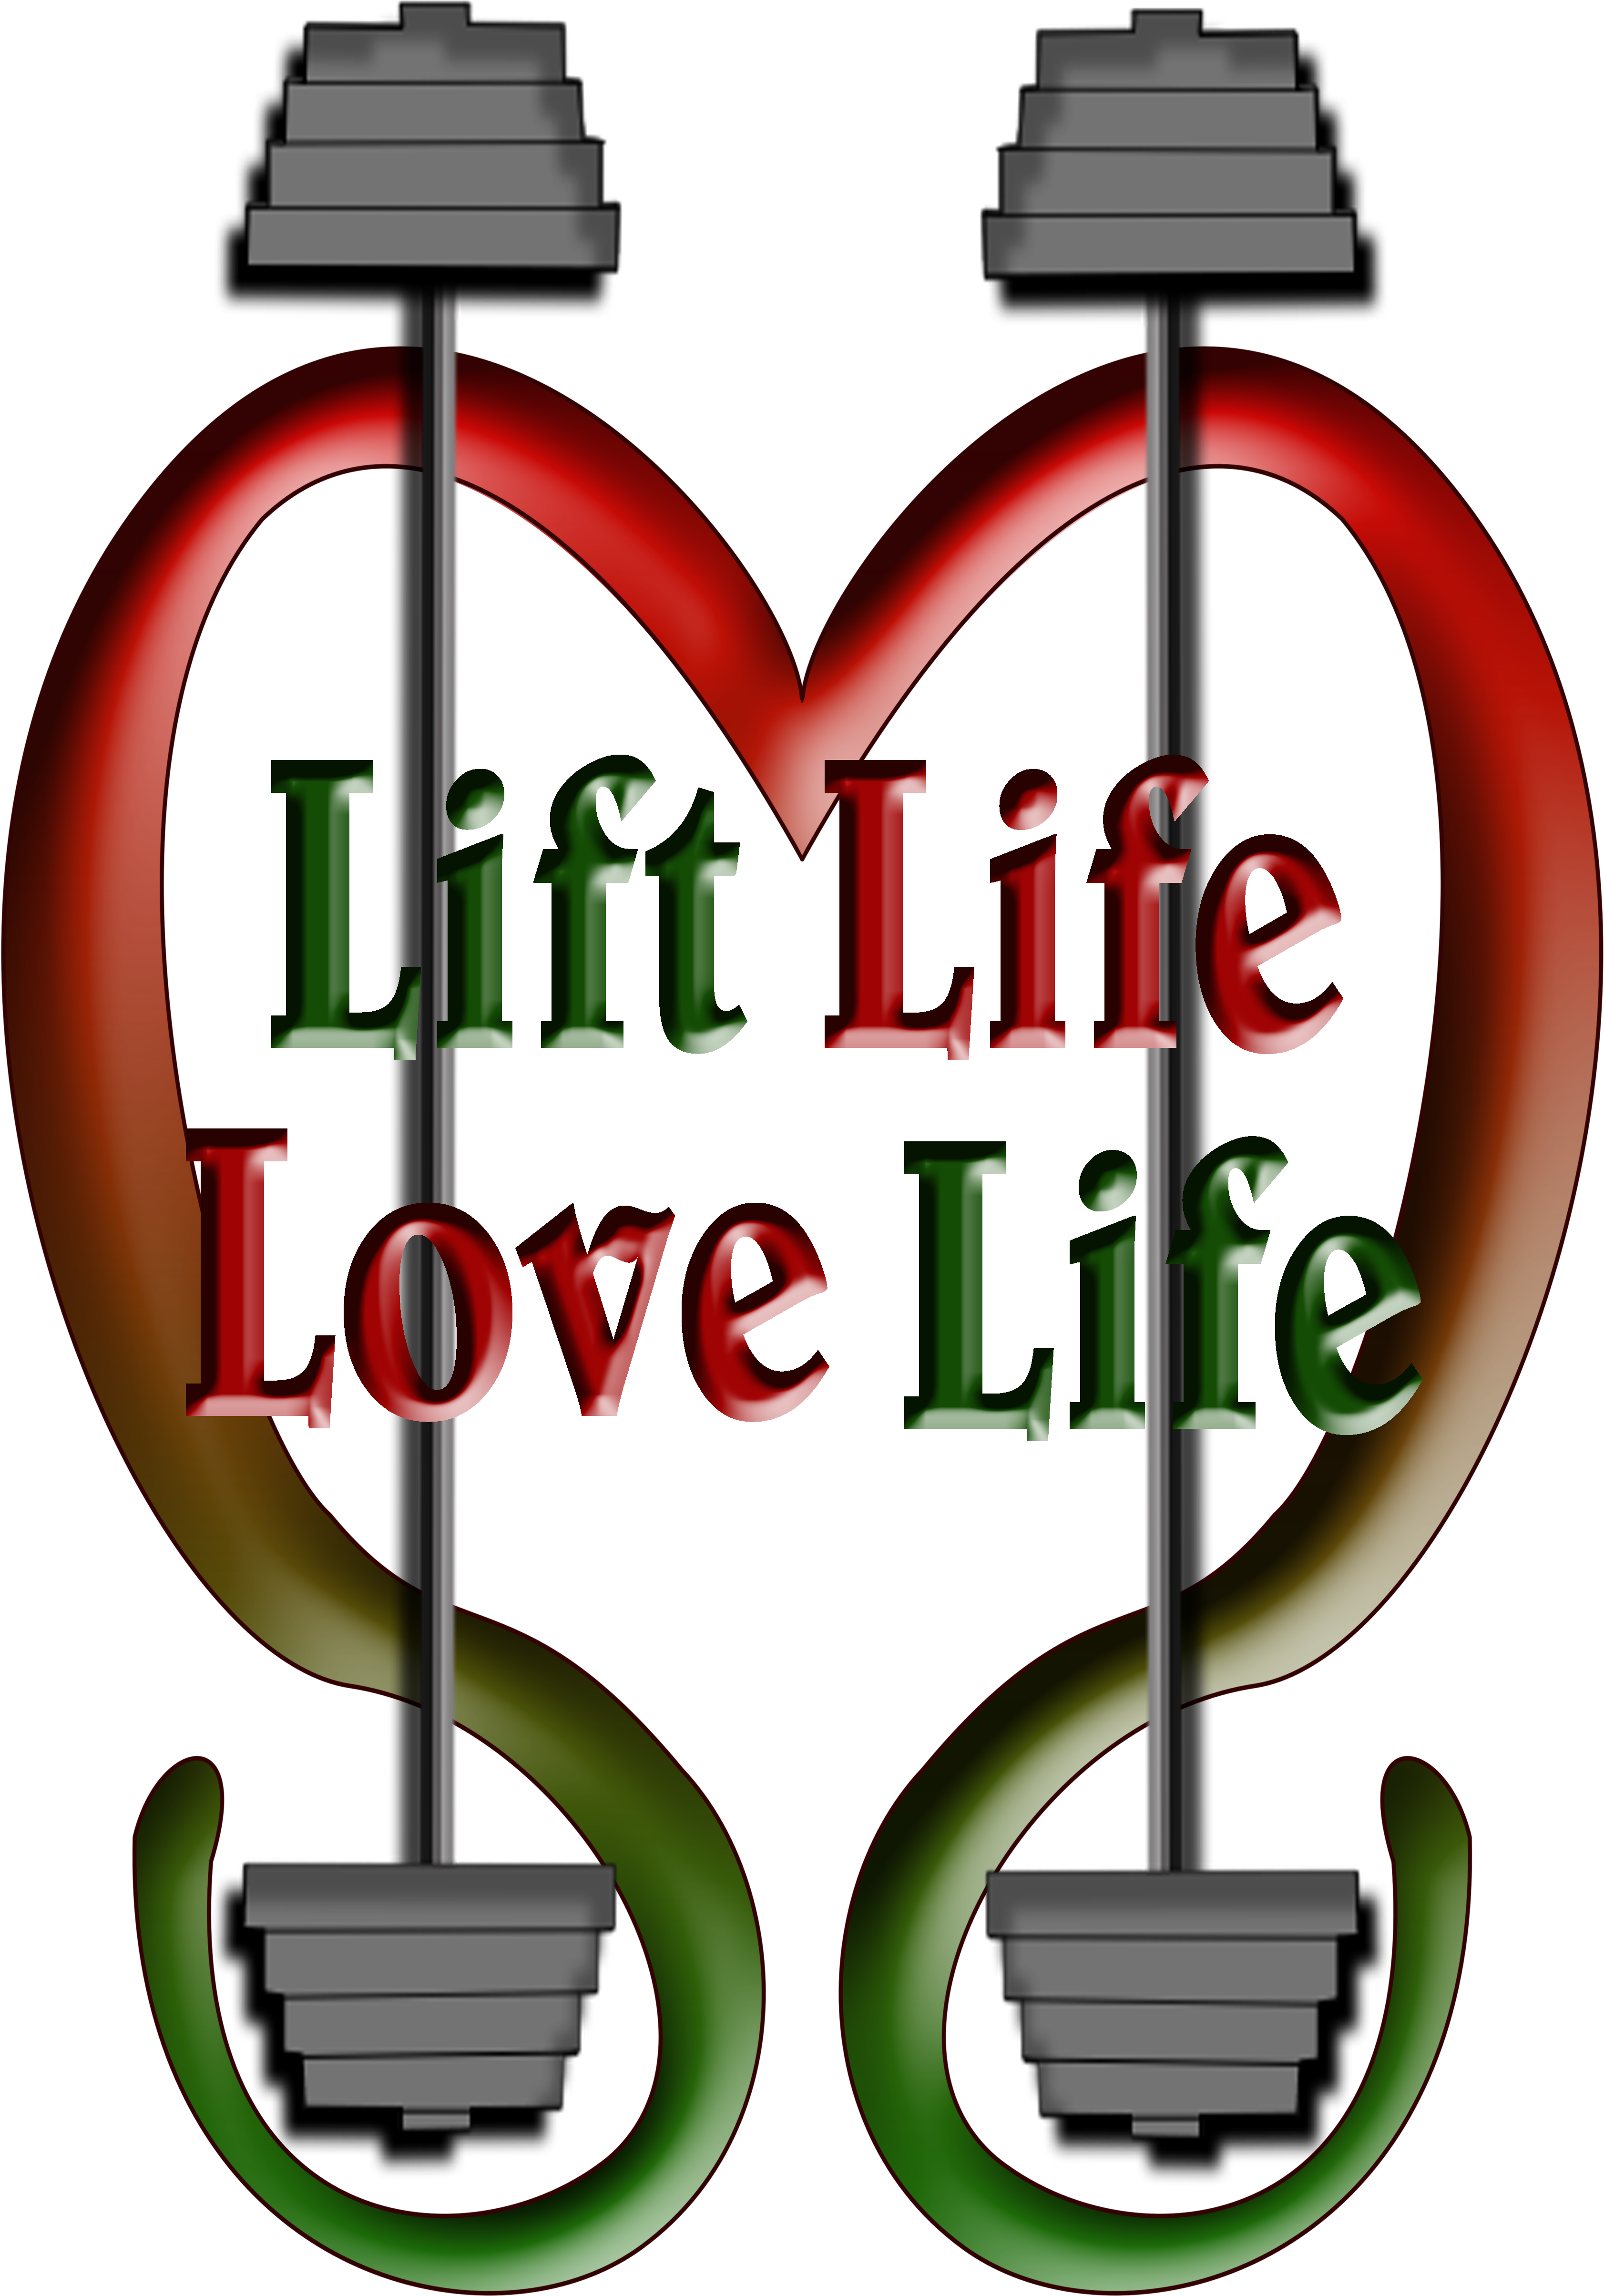 Liftlife Lovelife - Lift Life Biotech Pvt Ltd (5000x6667)